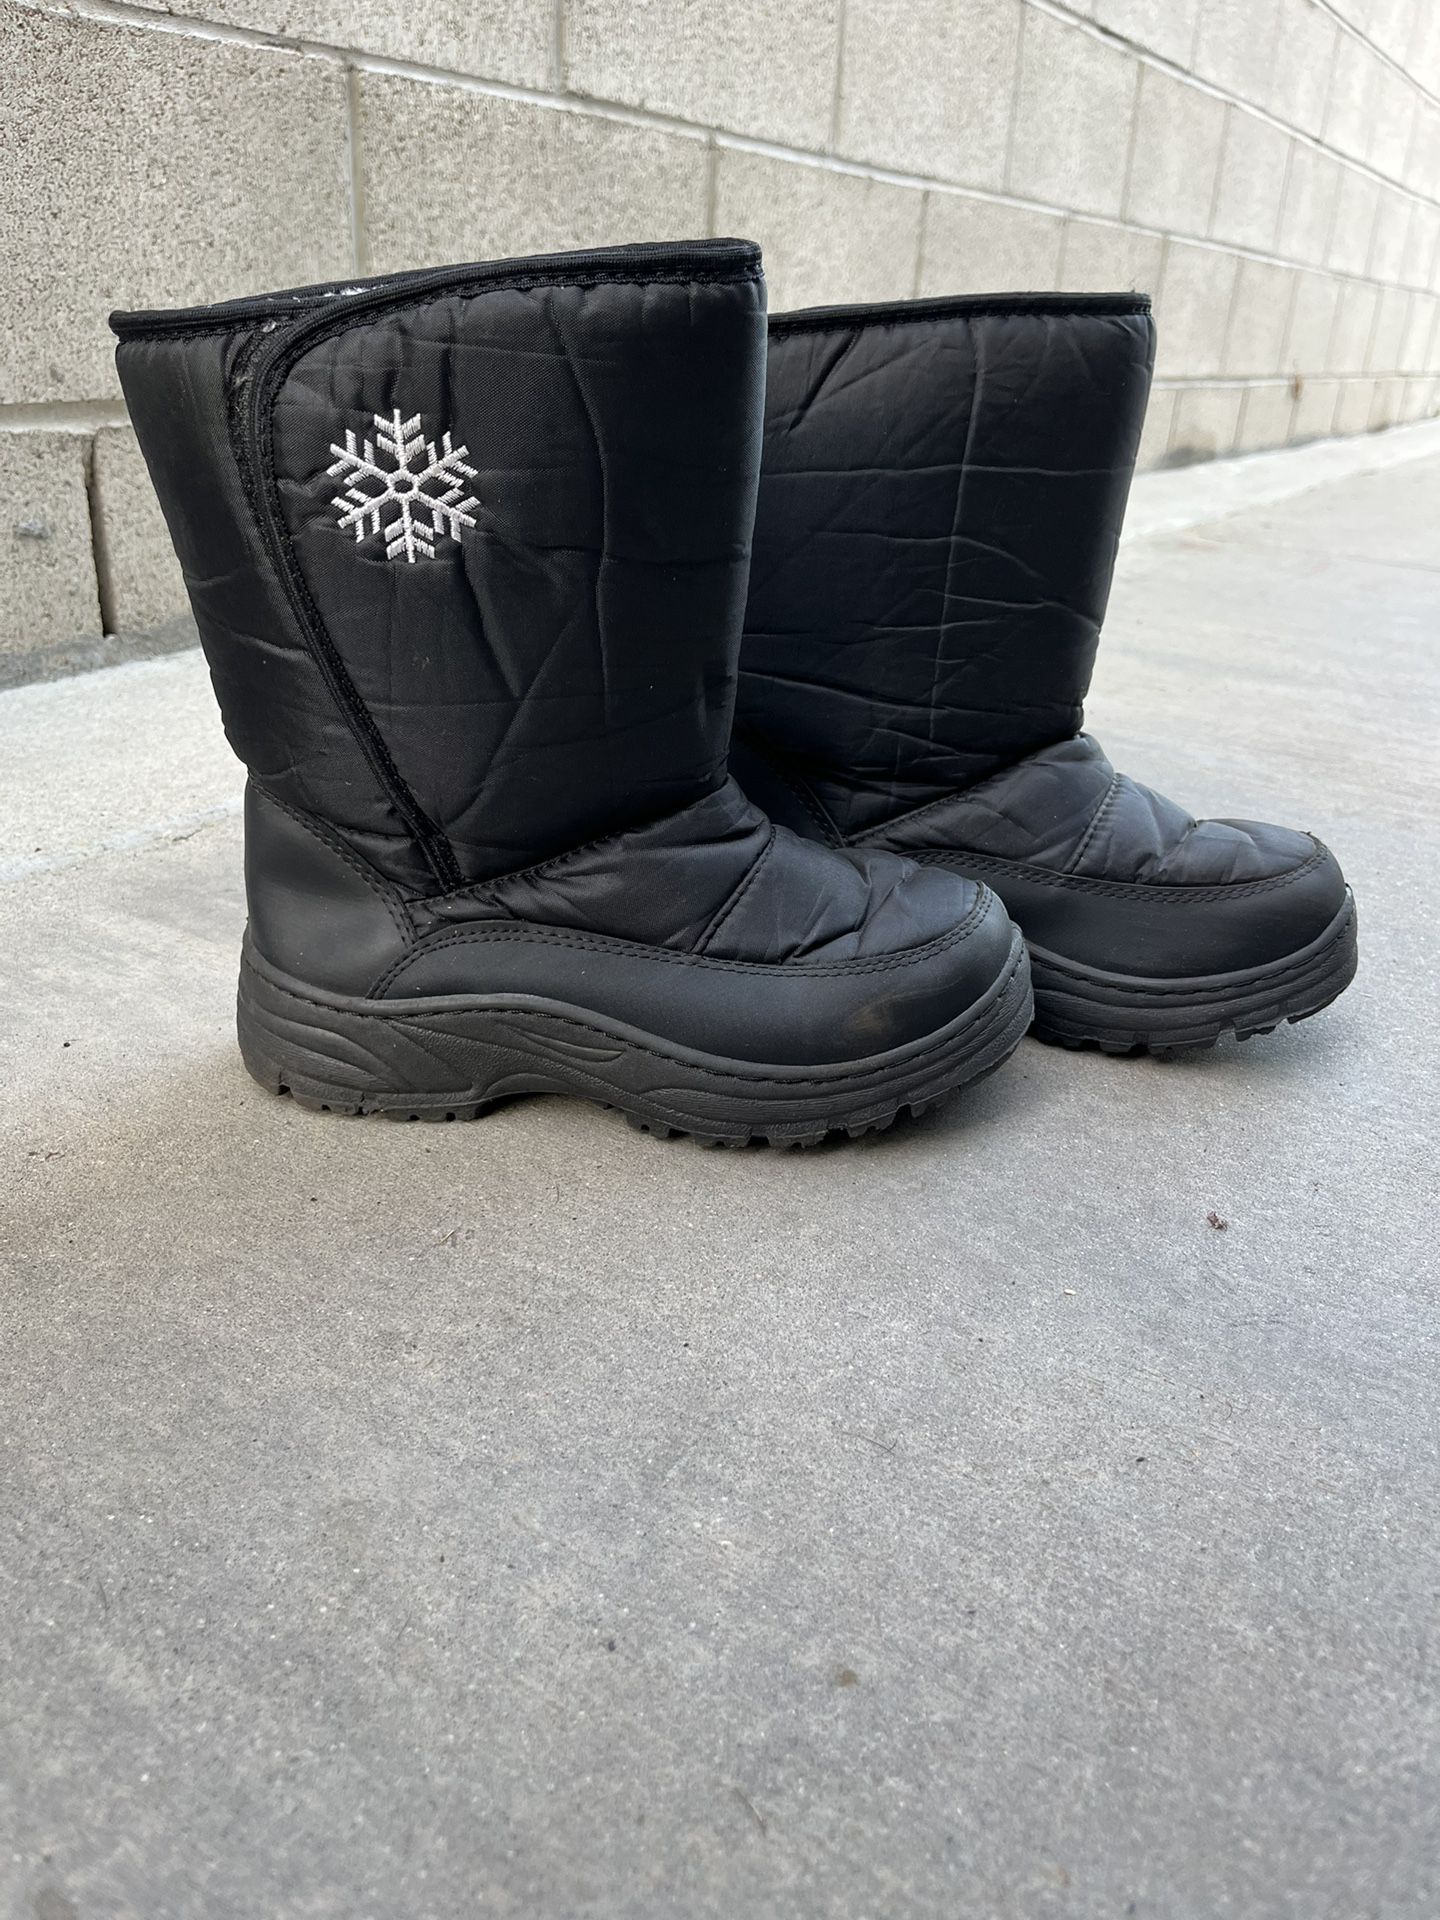 Snow Boots Women’s Size 6